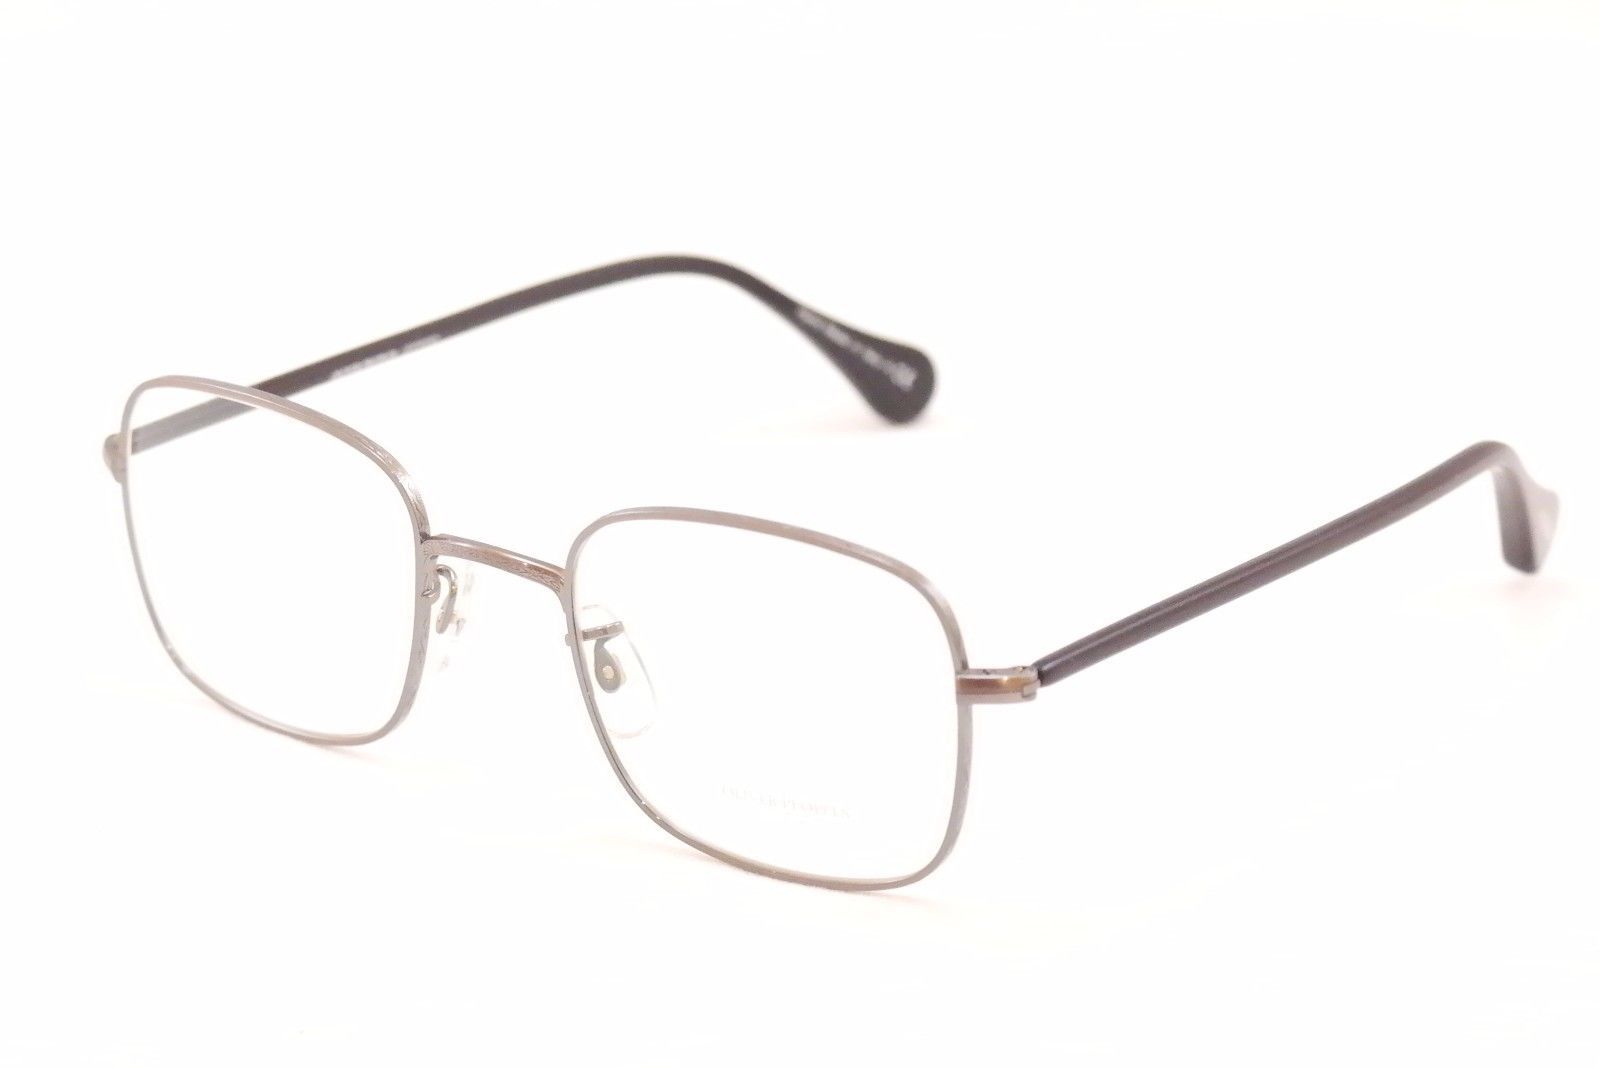 Authentic Oliver Peoples Eyeglasses Titanium Frame OV1129T Redfield Pewter Black - $119.39